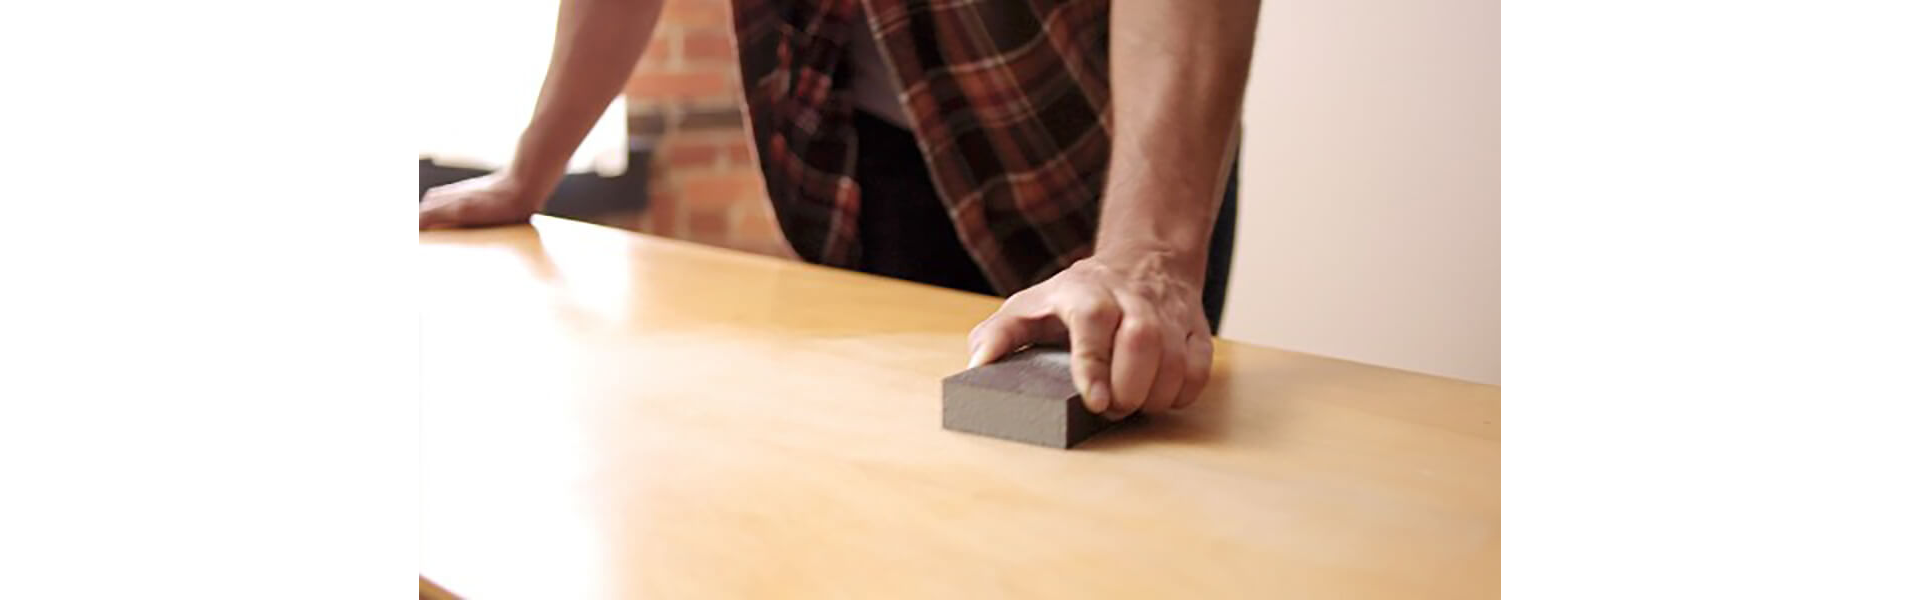 A man sanding a table surface.